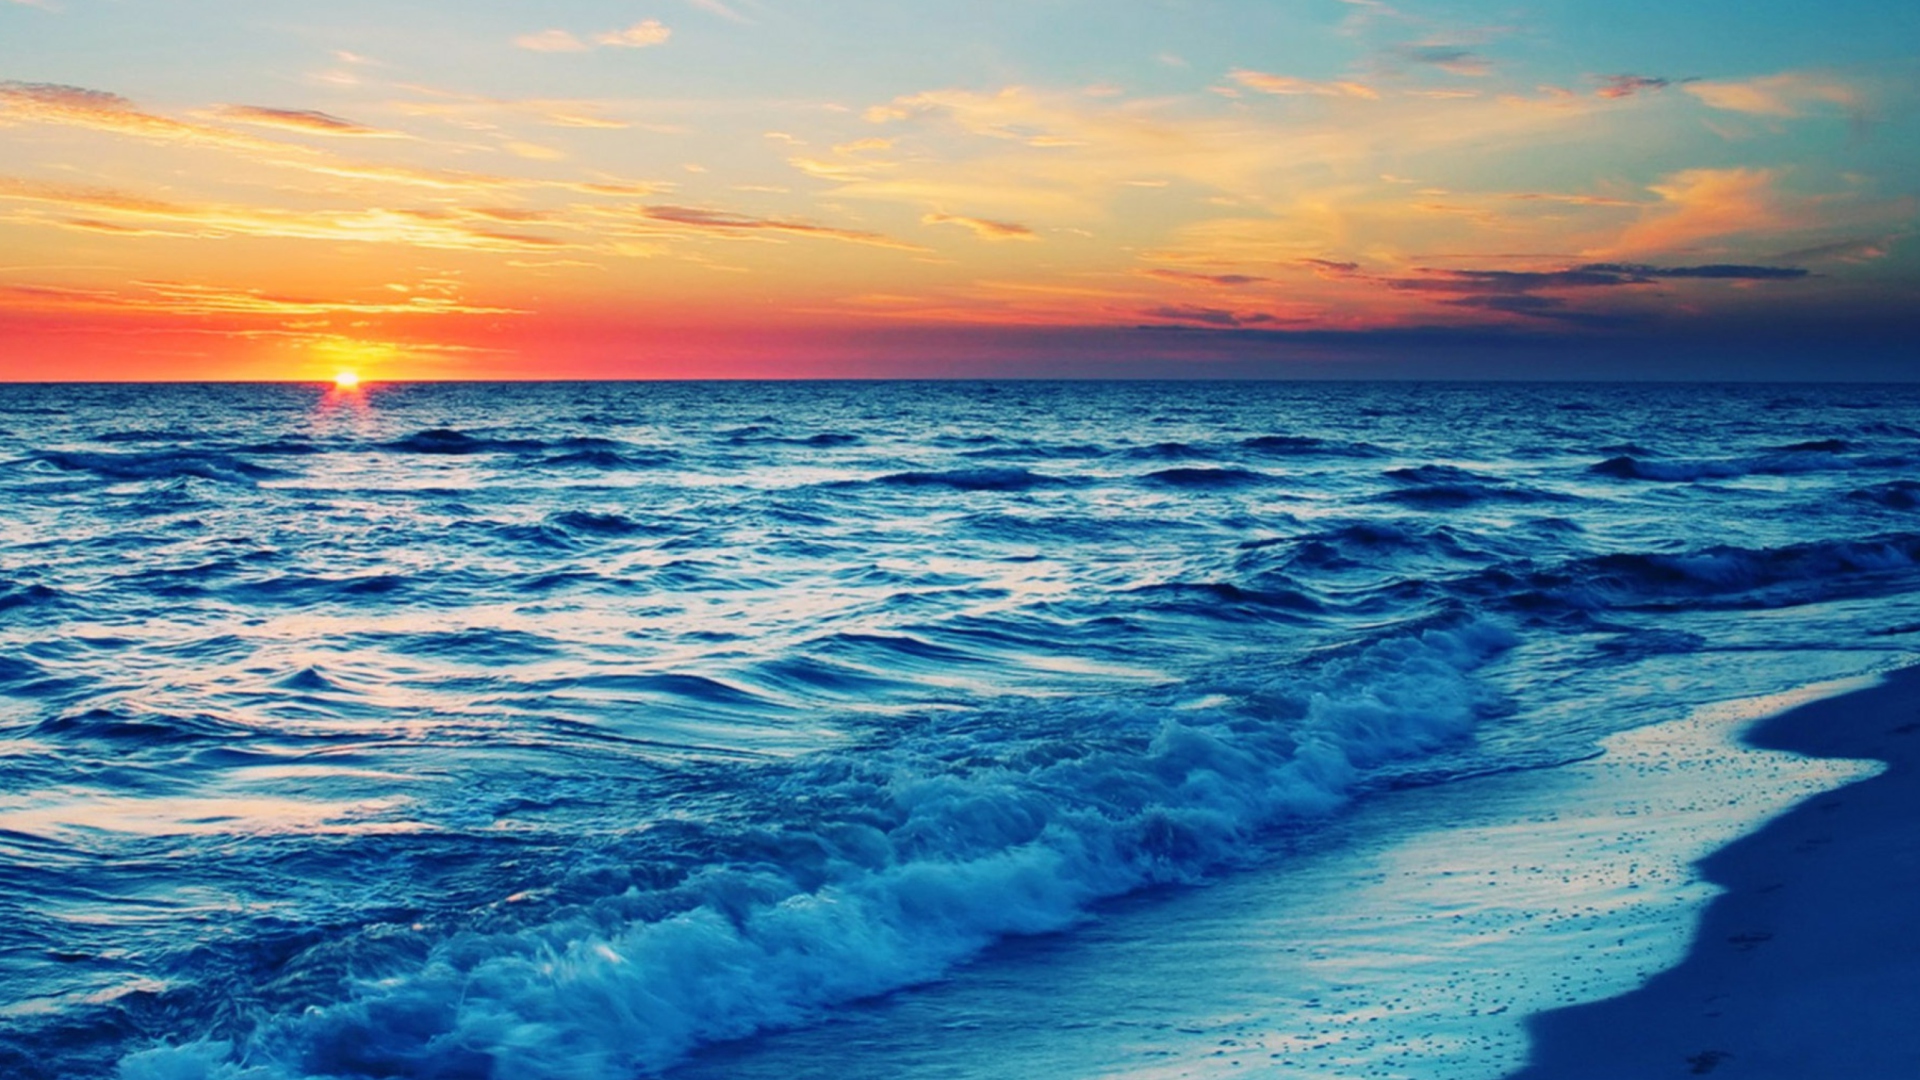 Обои Ocean Beach At Sunset 1920x1080